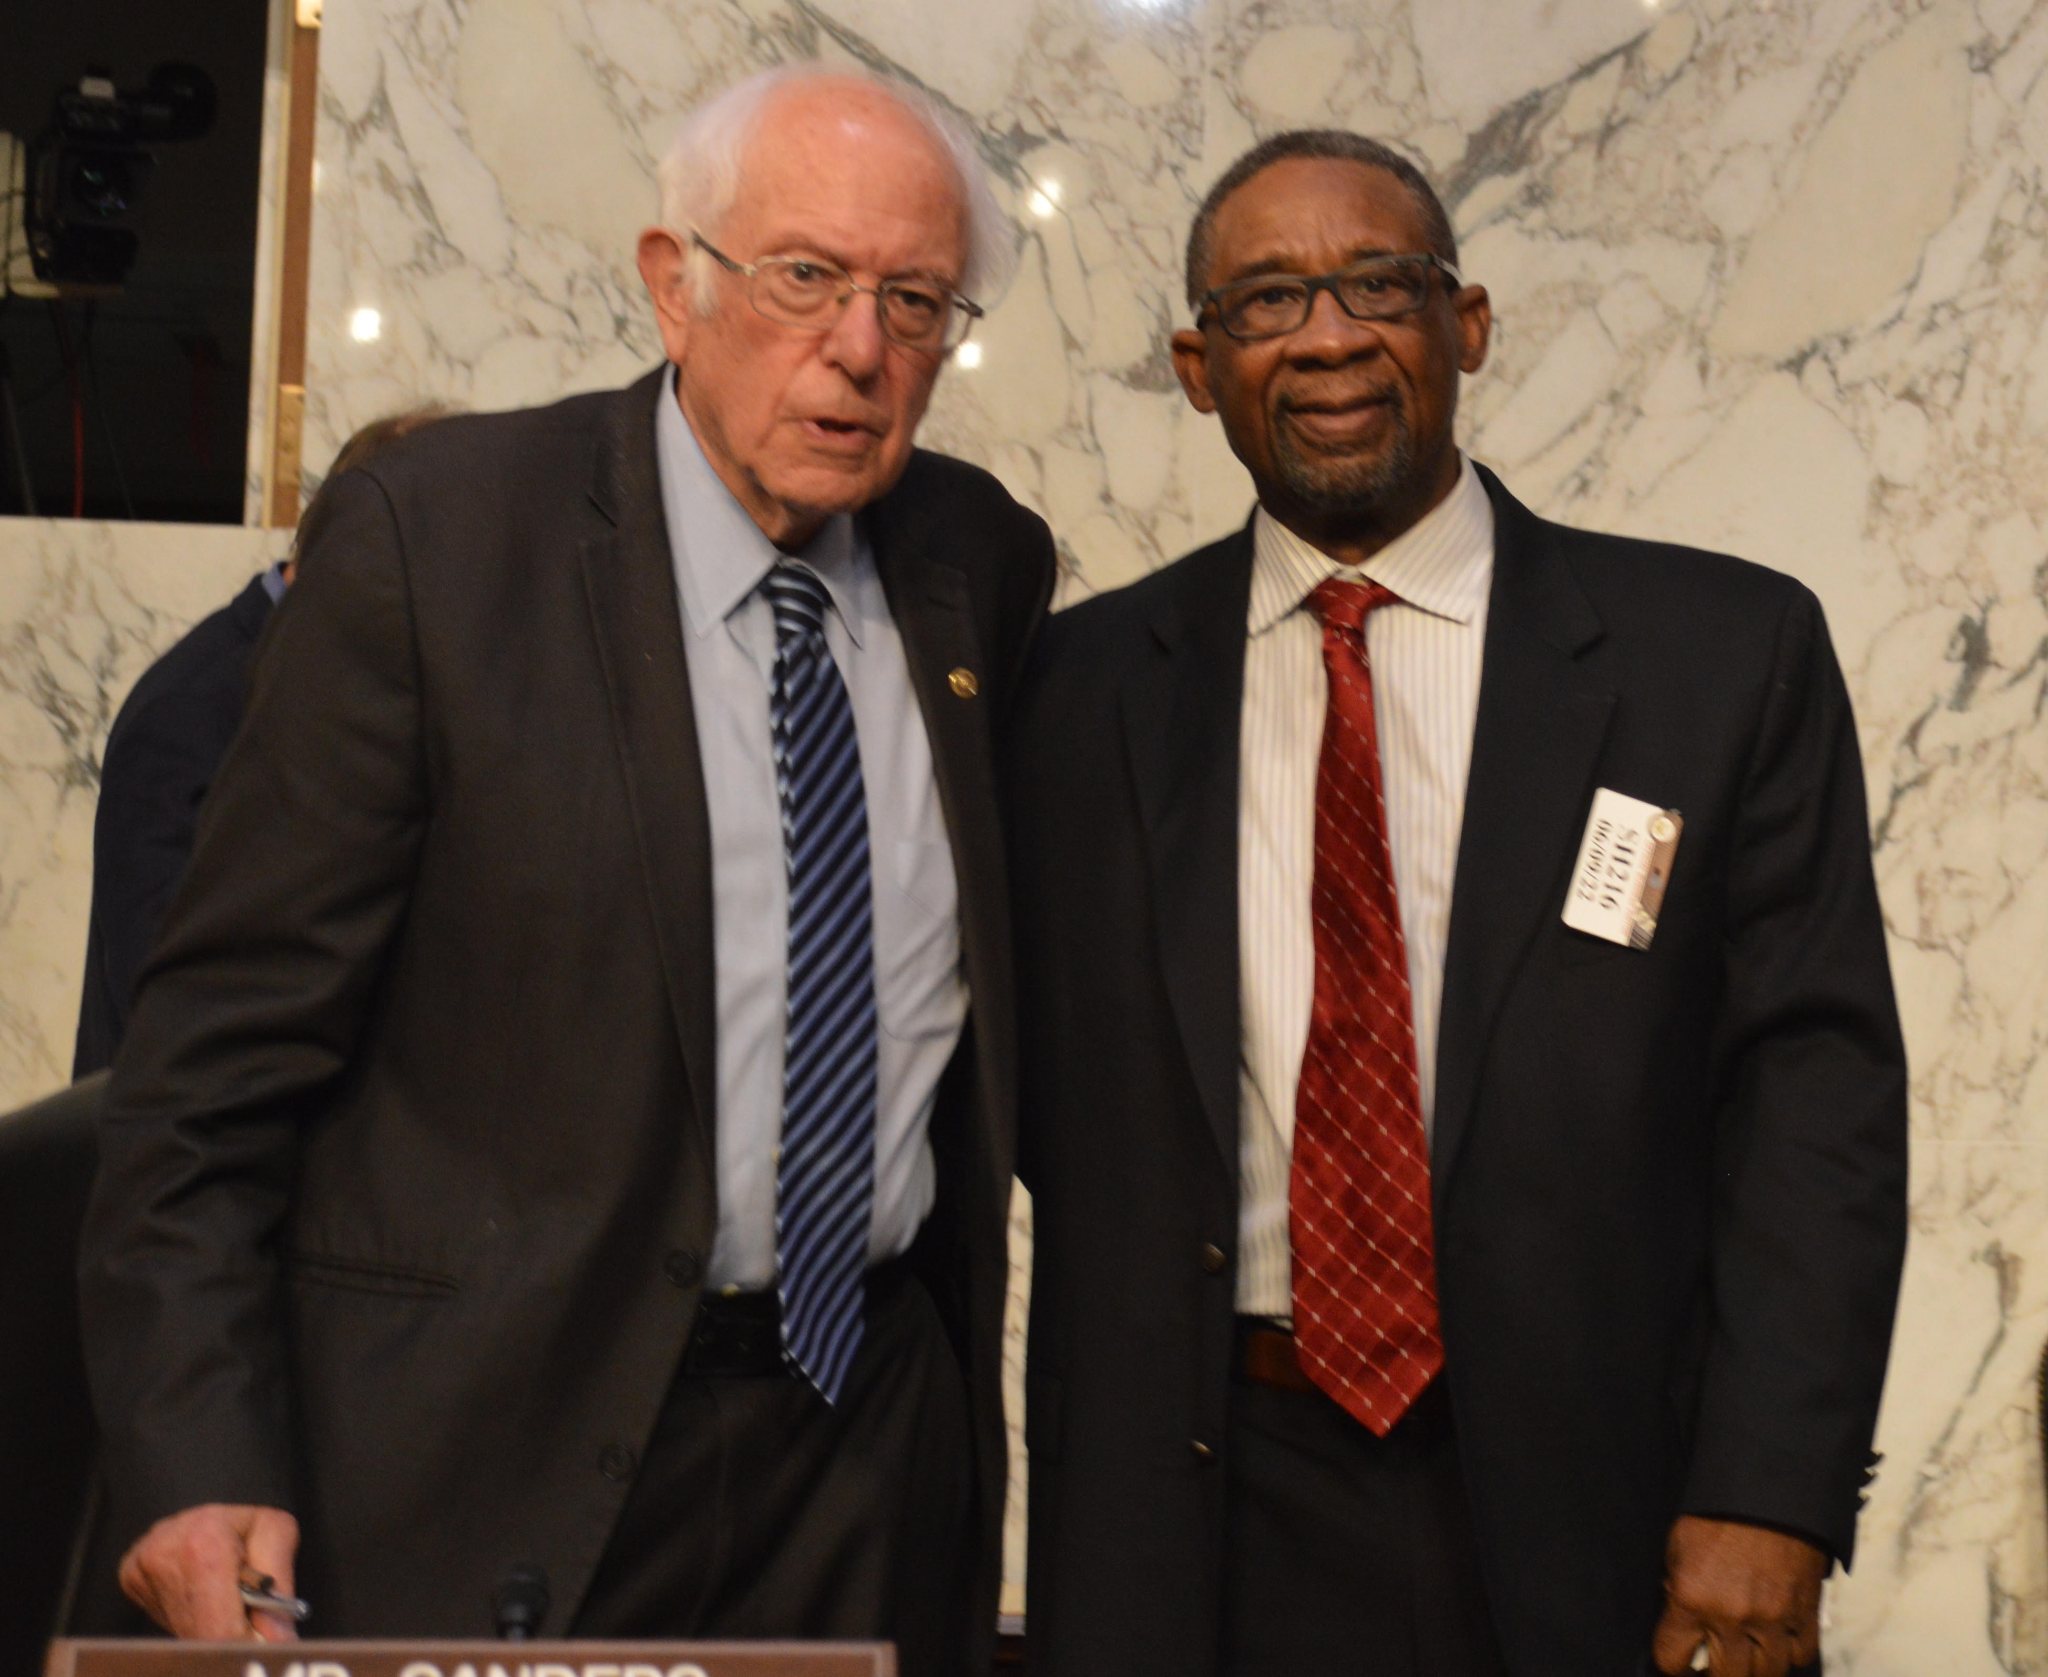 Sen. Sanders and President Roach